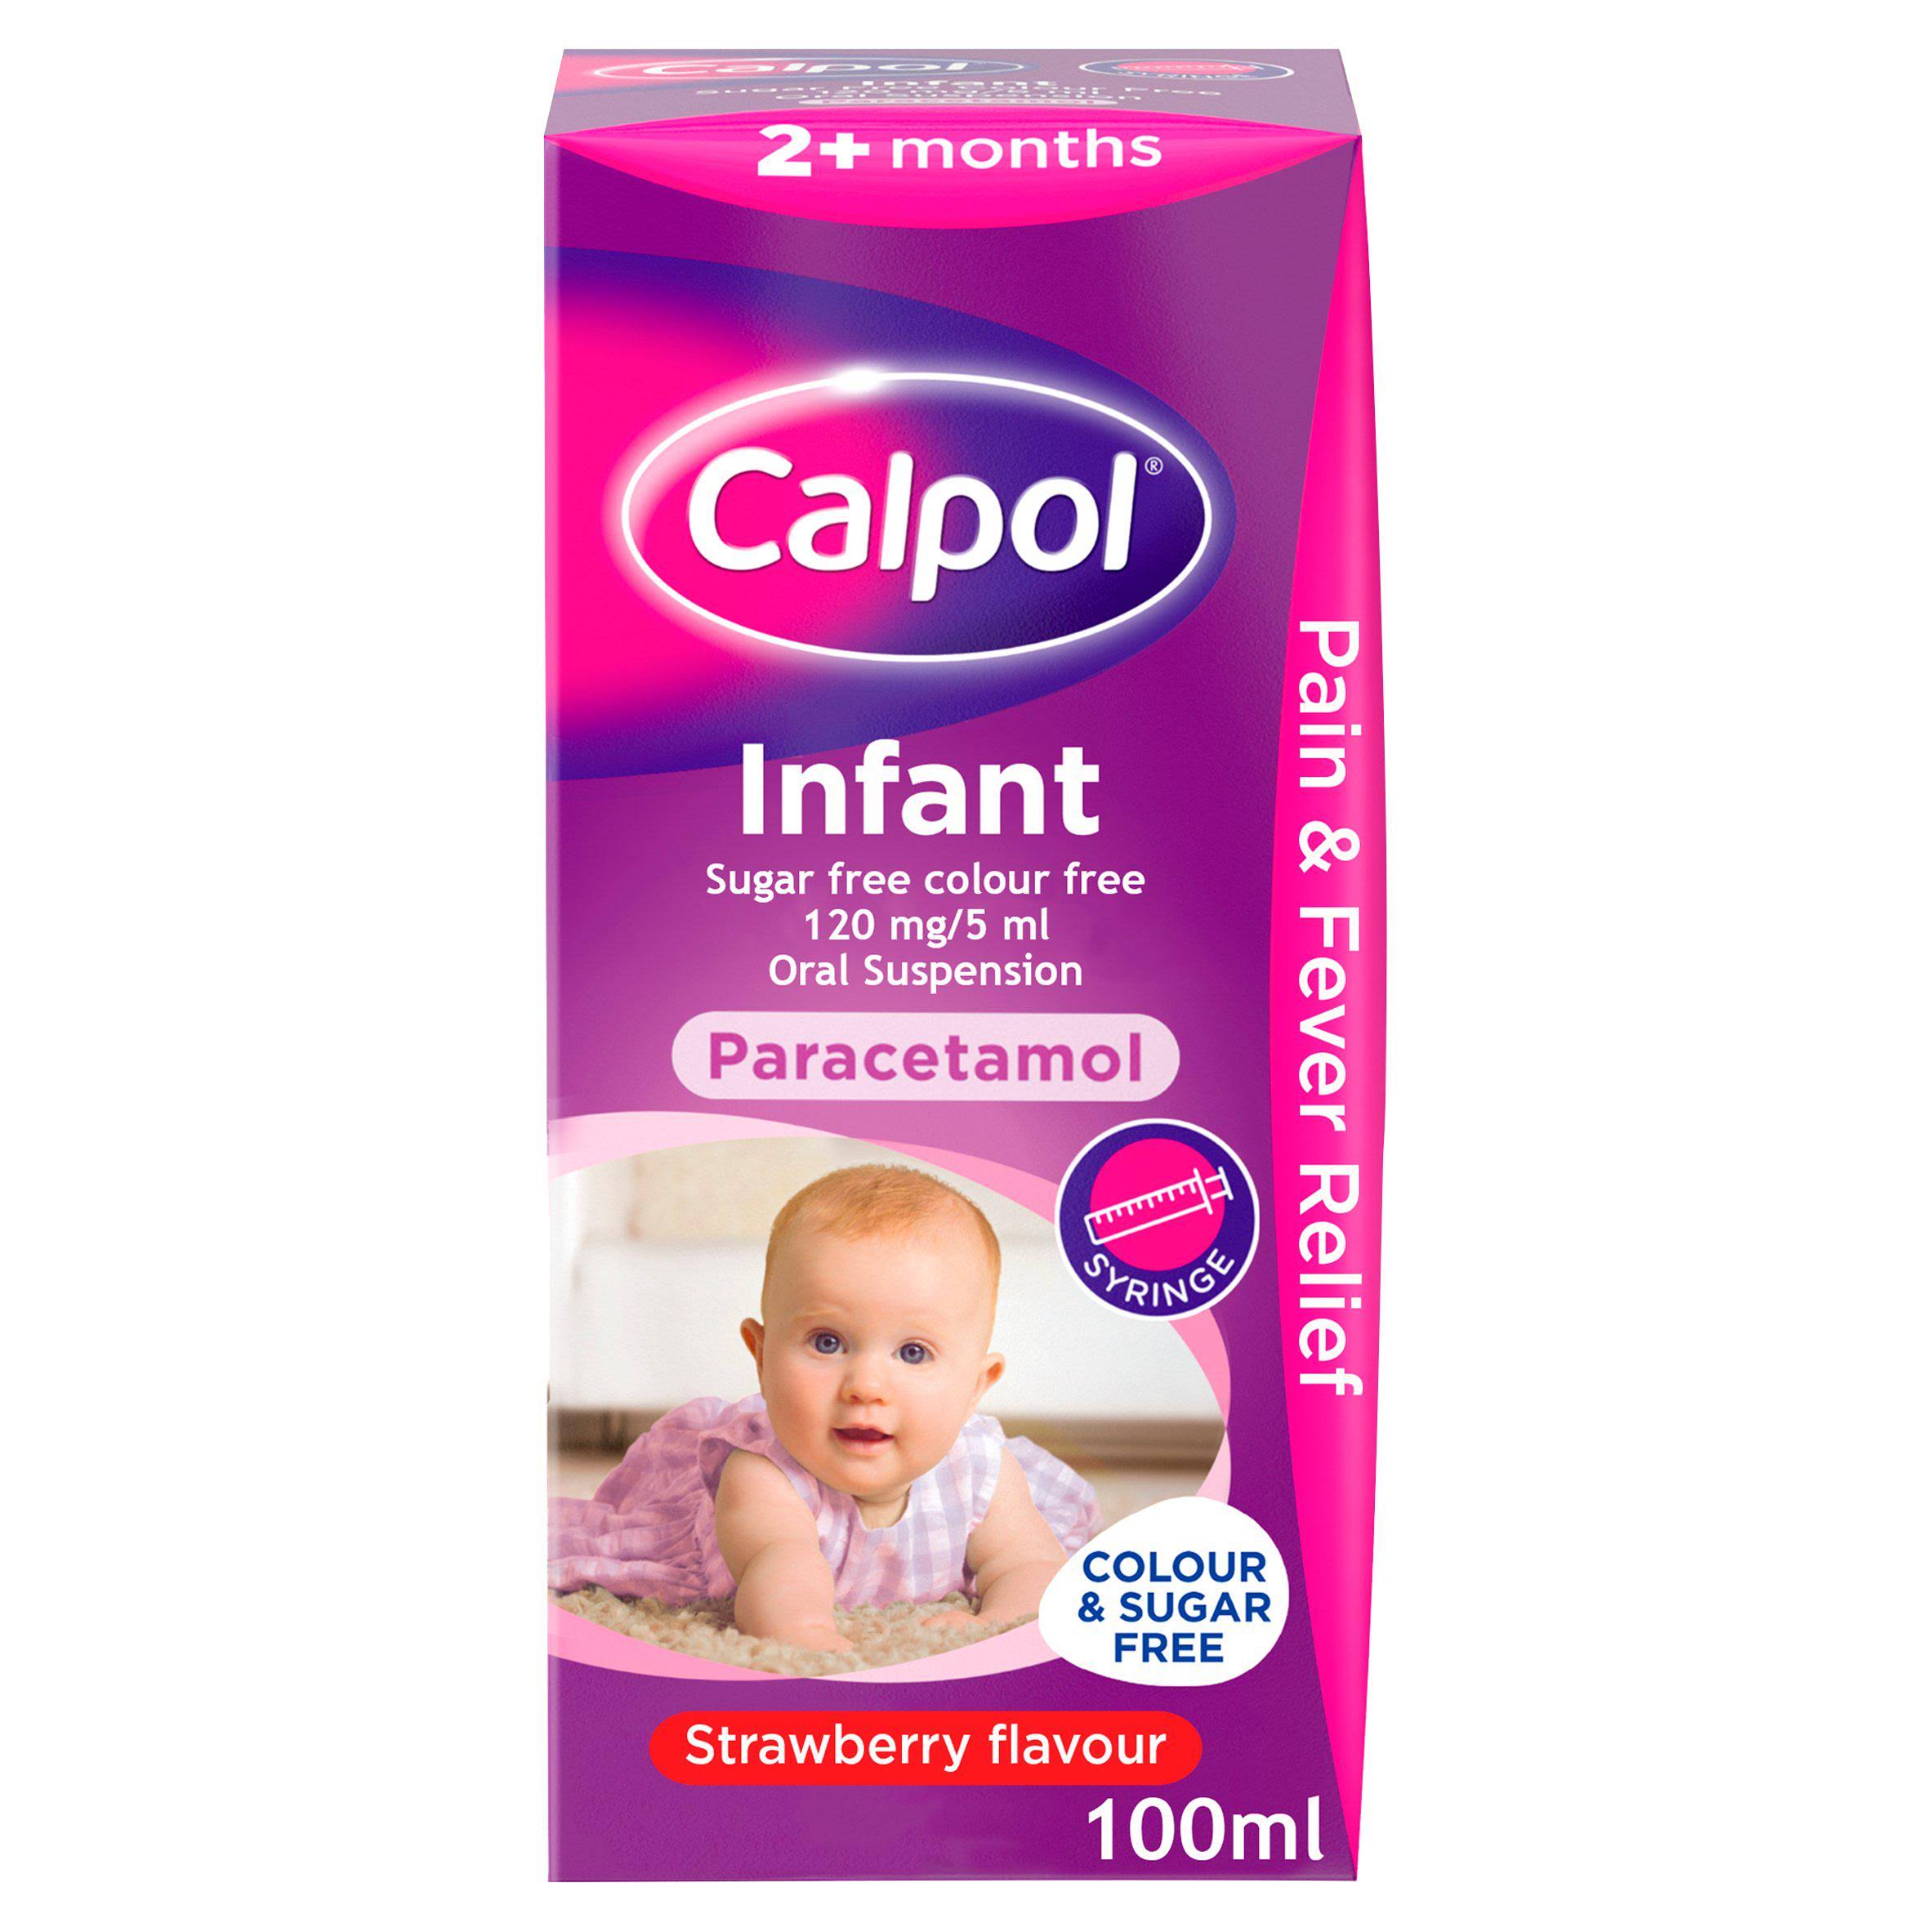 Calpol Infant Suspension Paracetamol Medication - Sugar and Colour Free , 100ml